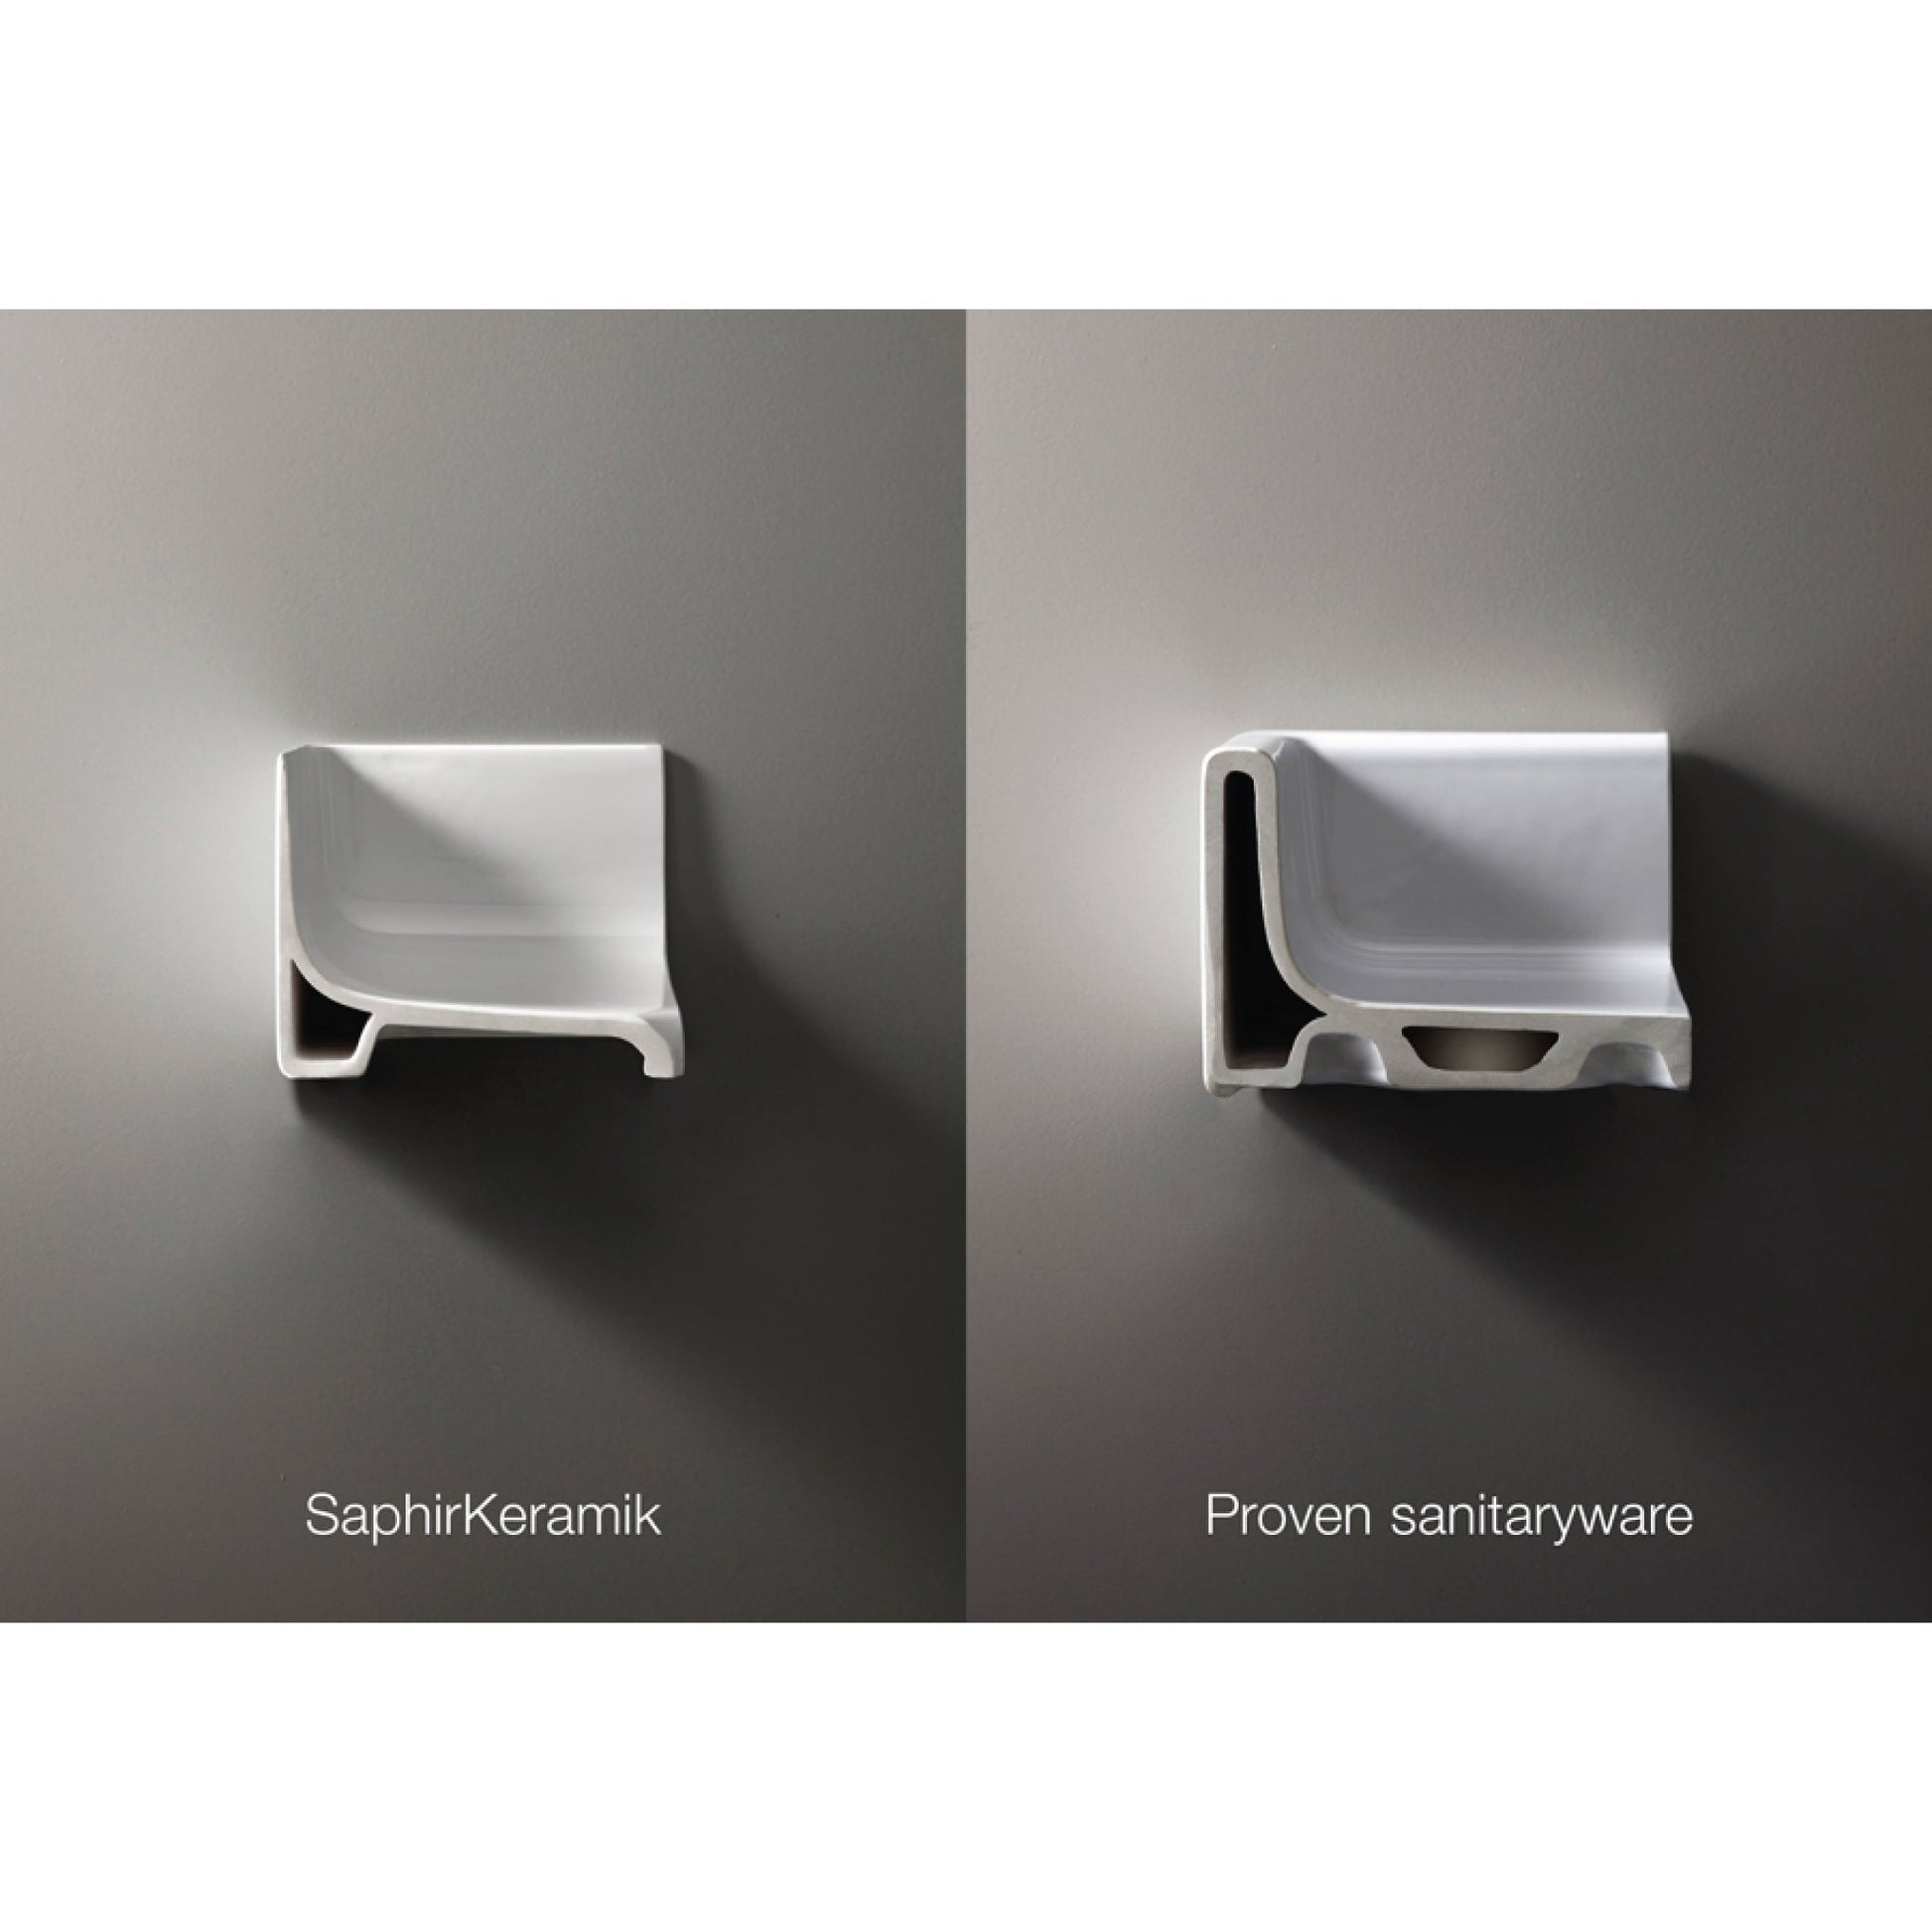 Laufen Ino 14" x 14" Square Matte White Ceramic Drop-in Bathroom Sink With Overflow Slot